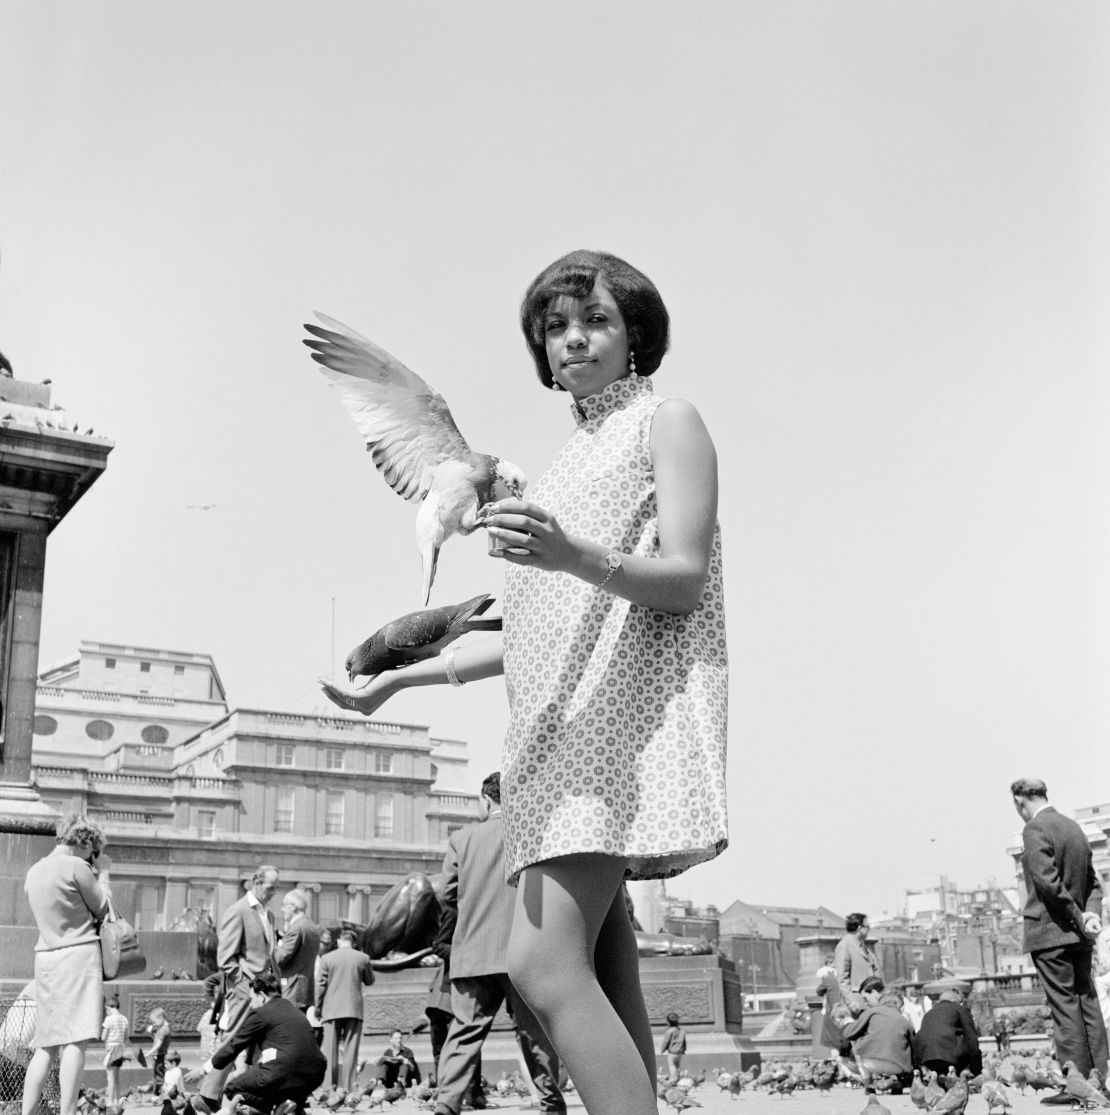 Erlin Ibreck at Trafalgar Square, 1966